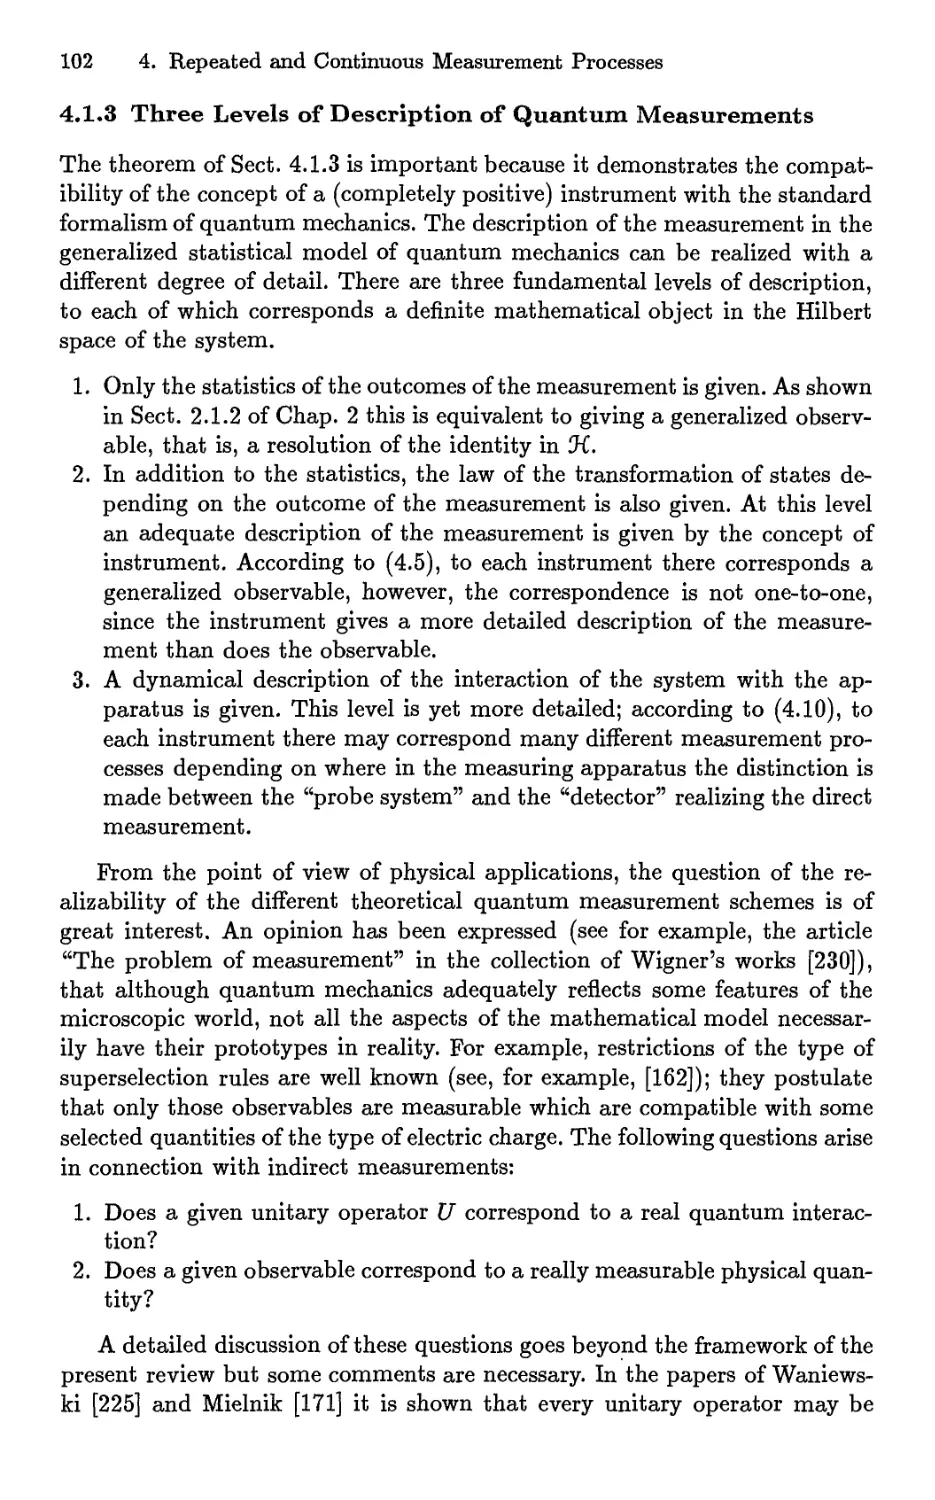 4.1.3 Three Levels of Description of Quantum Measurements